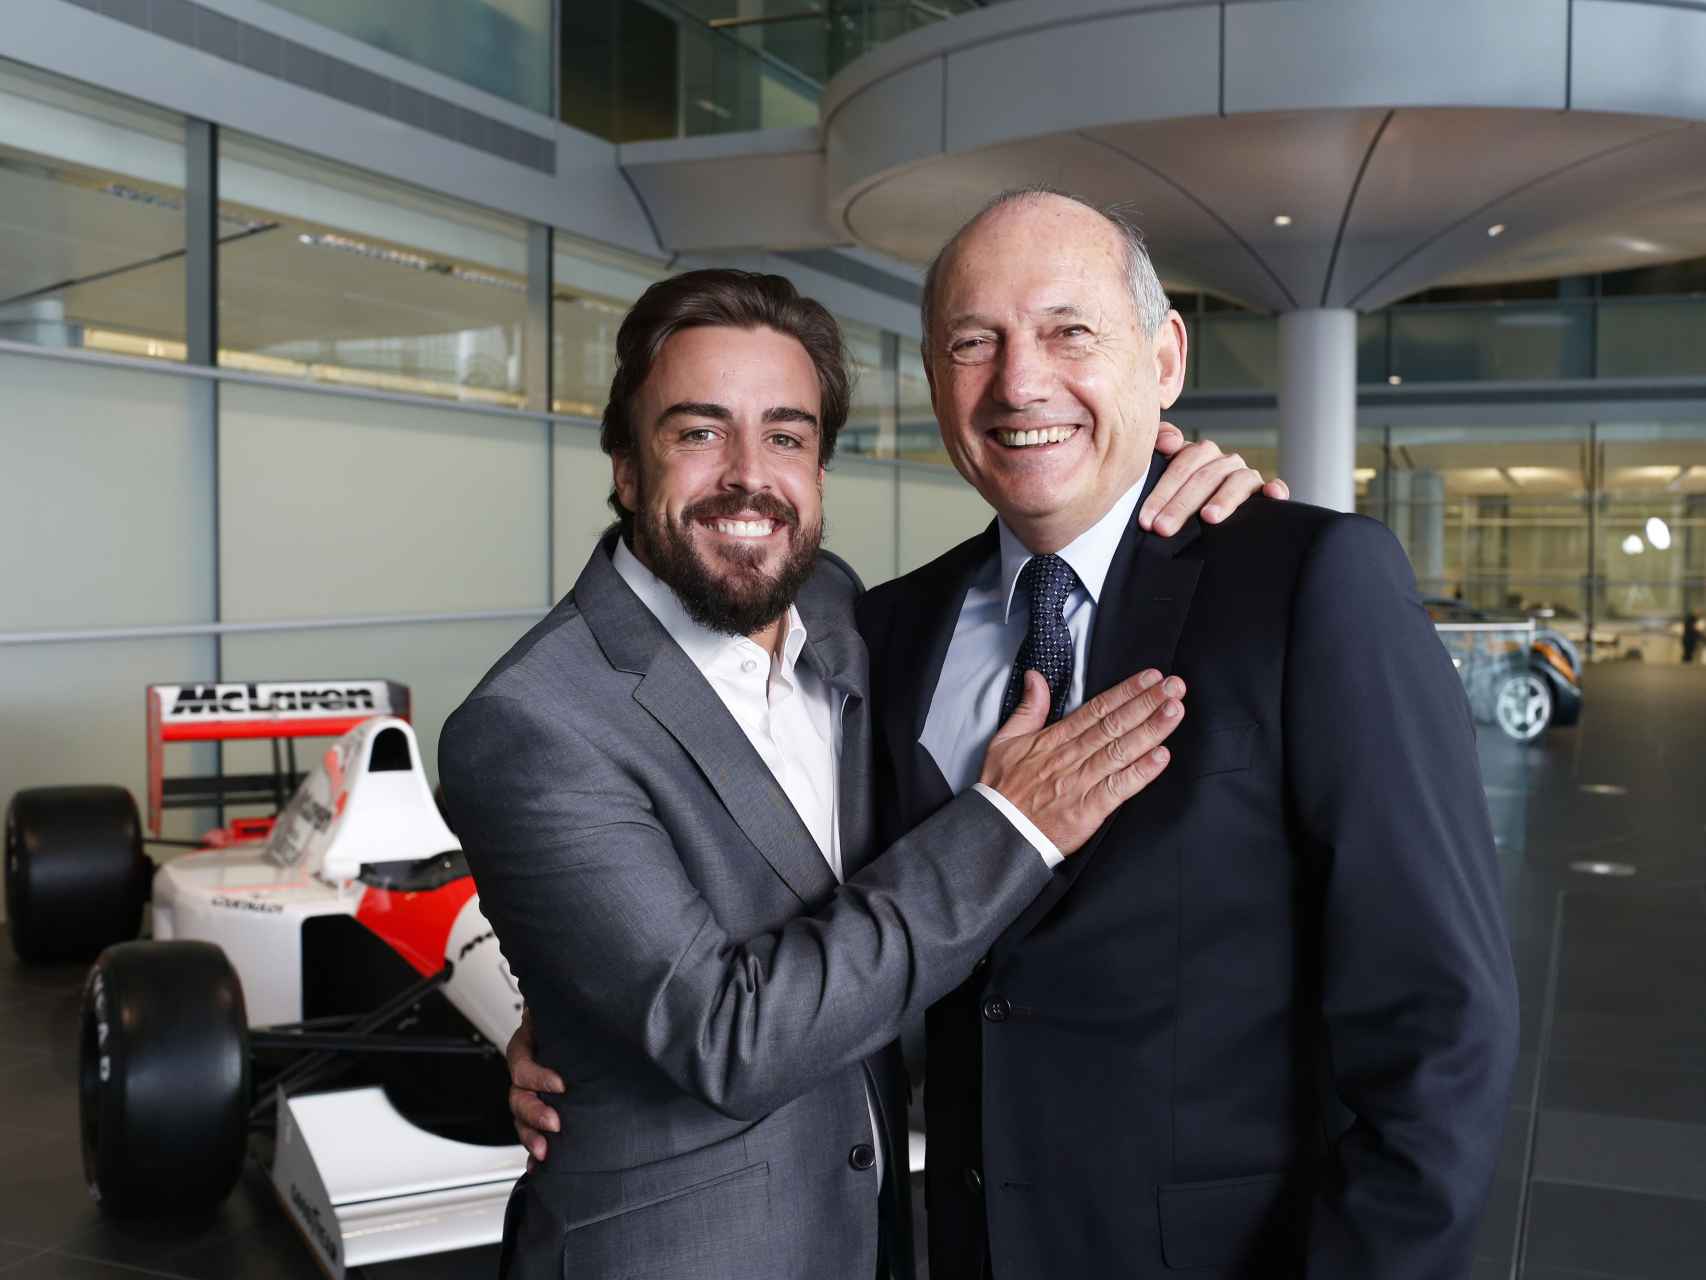 Fernando Alonso y Ron Dennis en Woking en 2015.